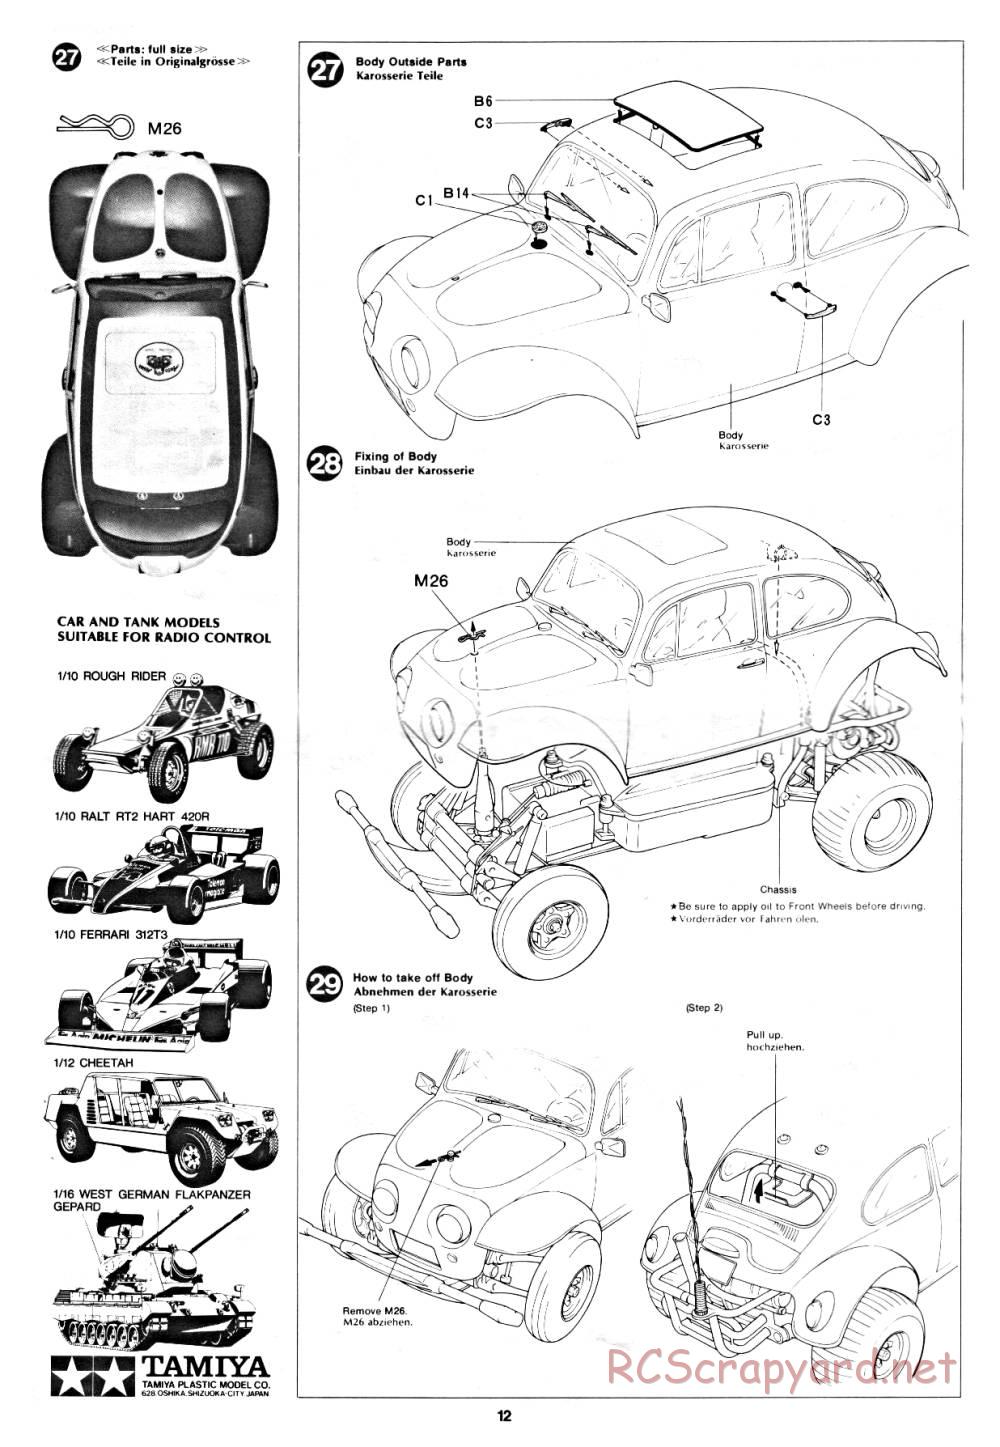 Tamiya - Sand Scorcher - 58016 - Manual - Page 12